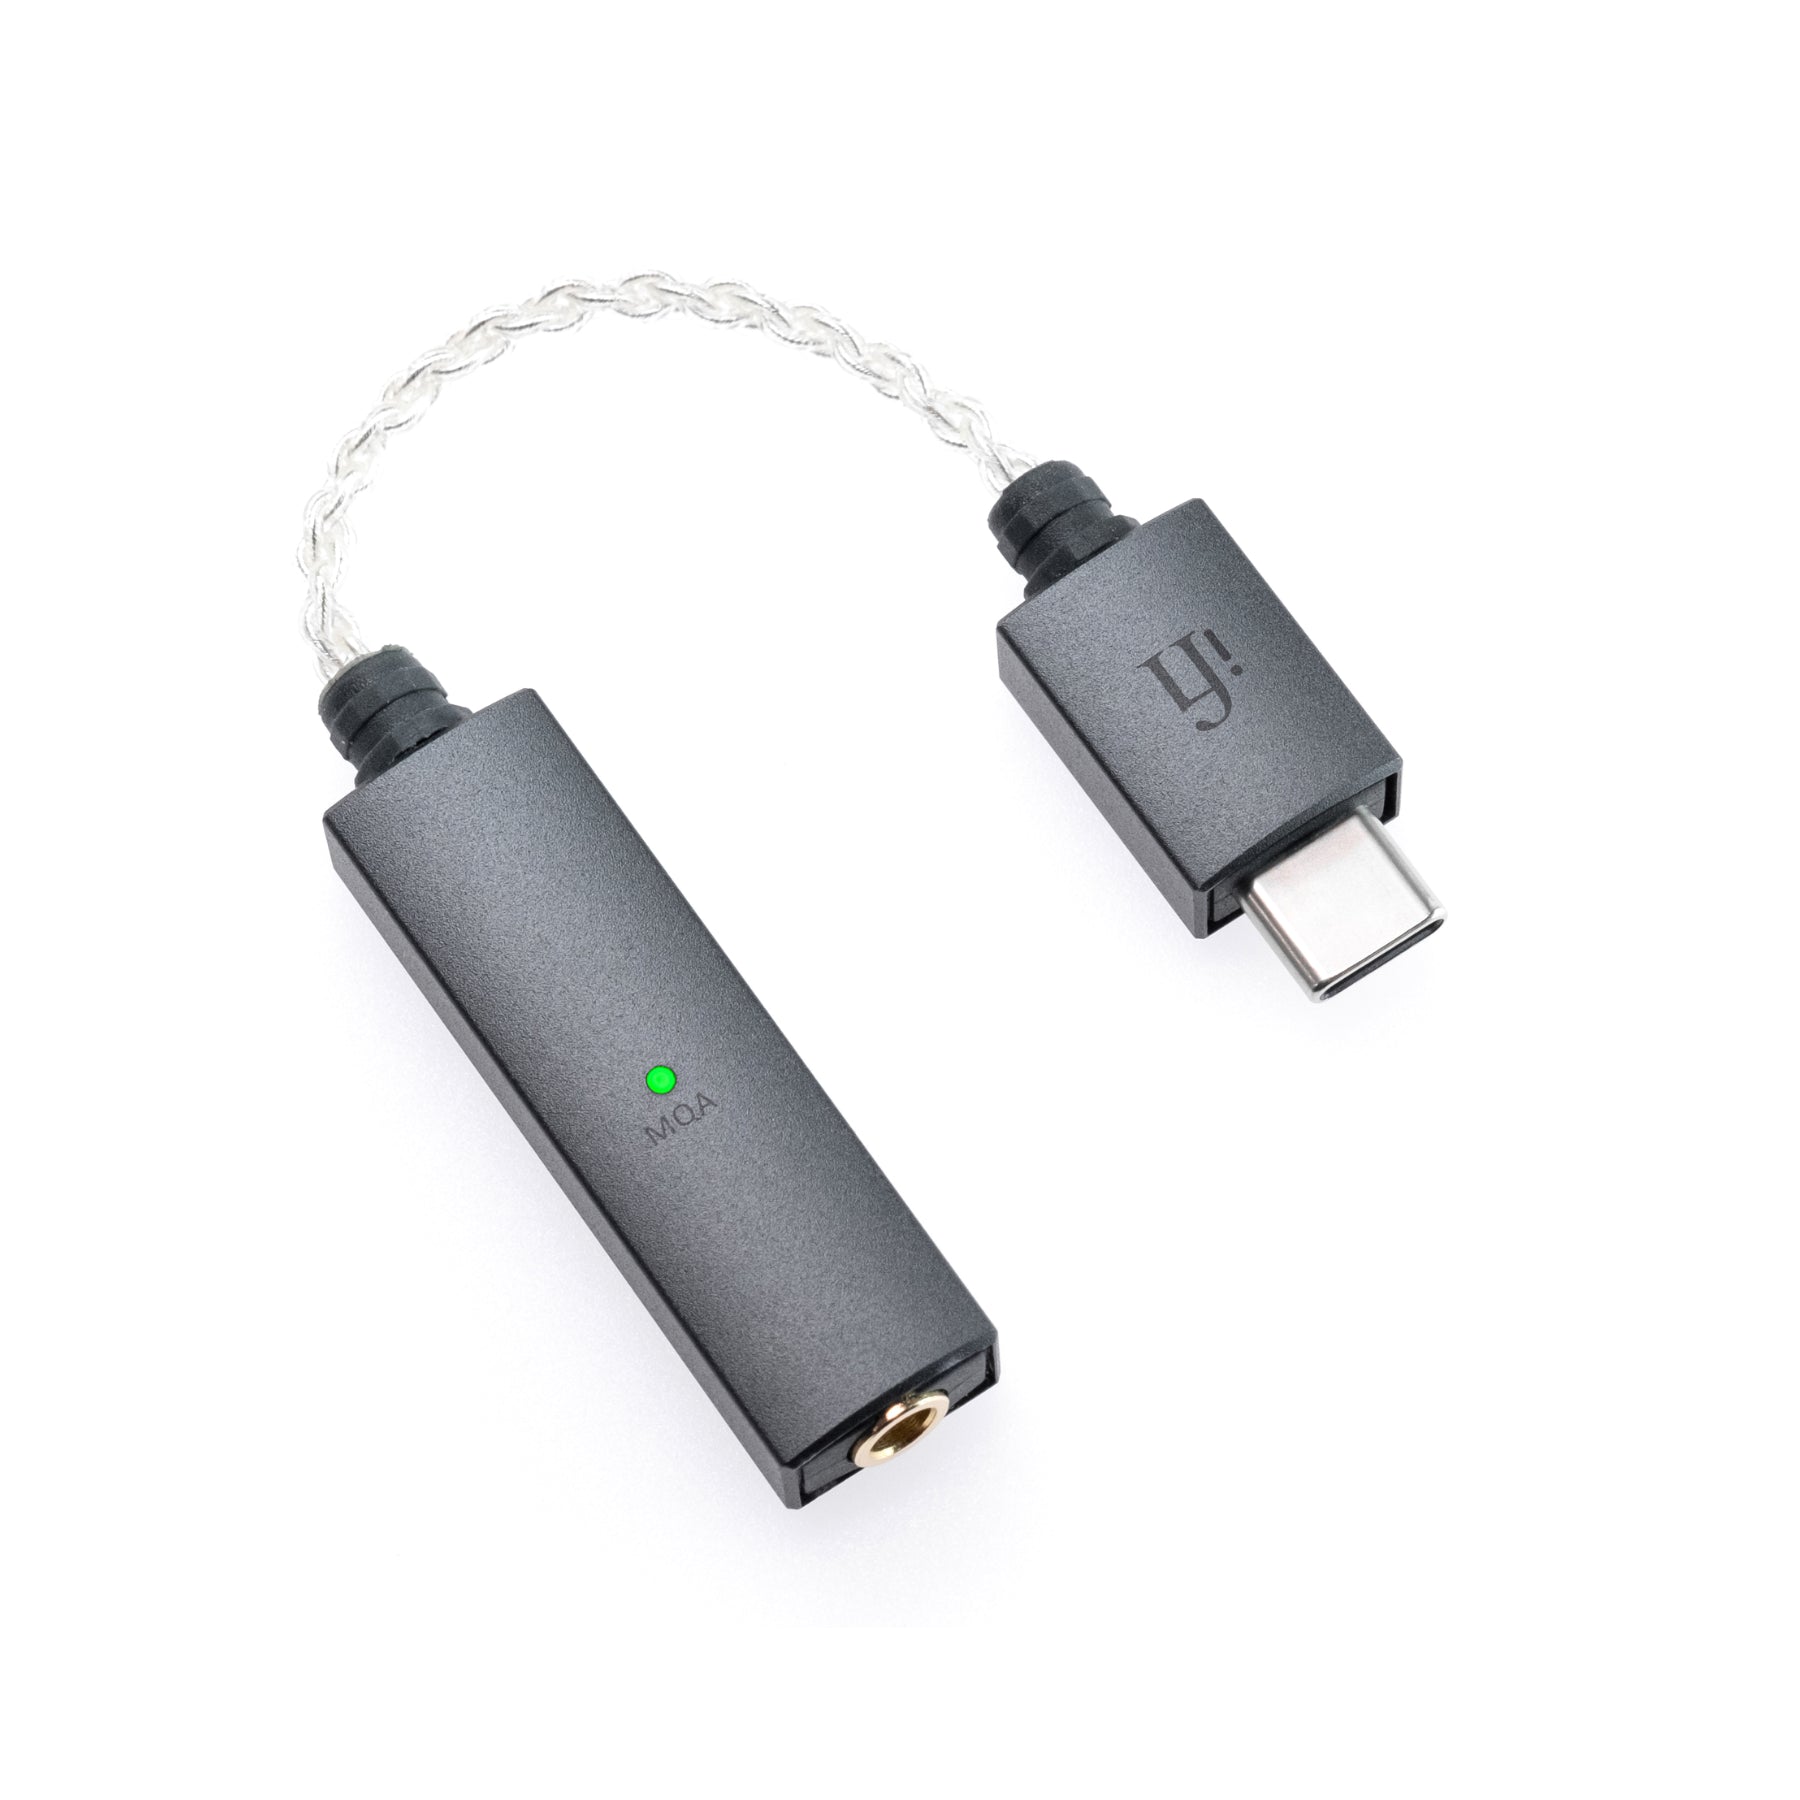 iFi Go Link USB-C DAC and Headphone Amp | ListenUp